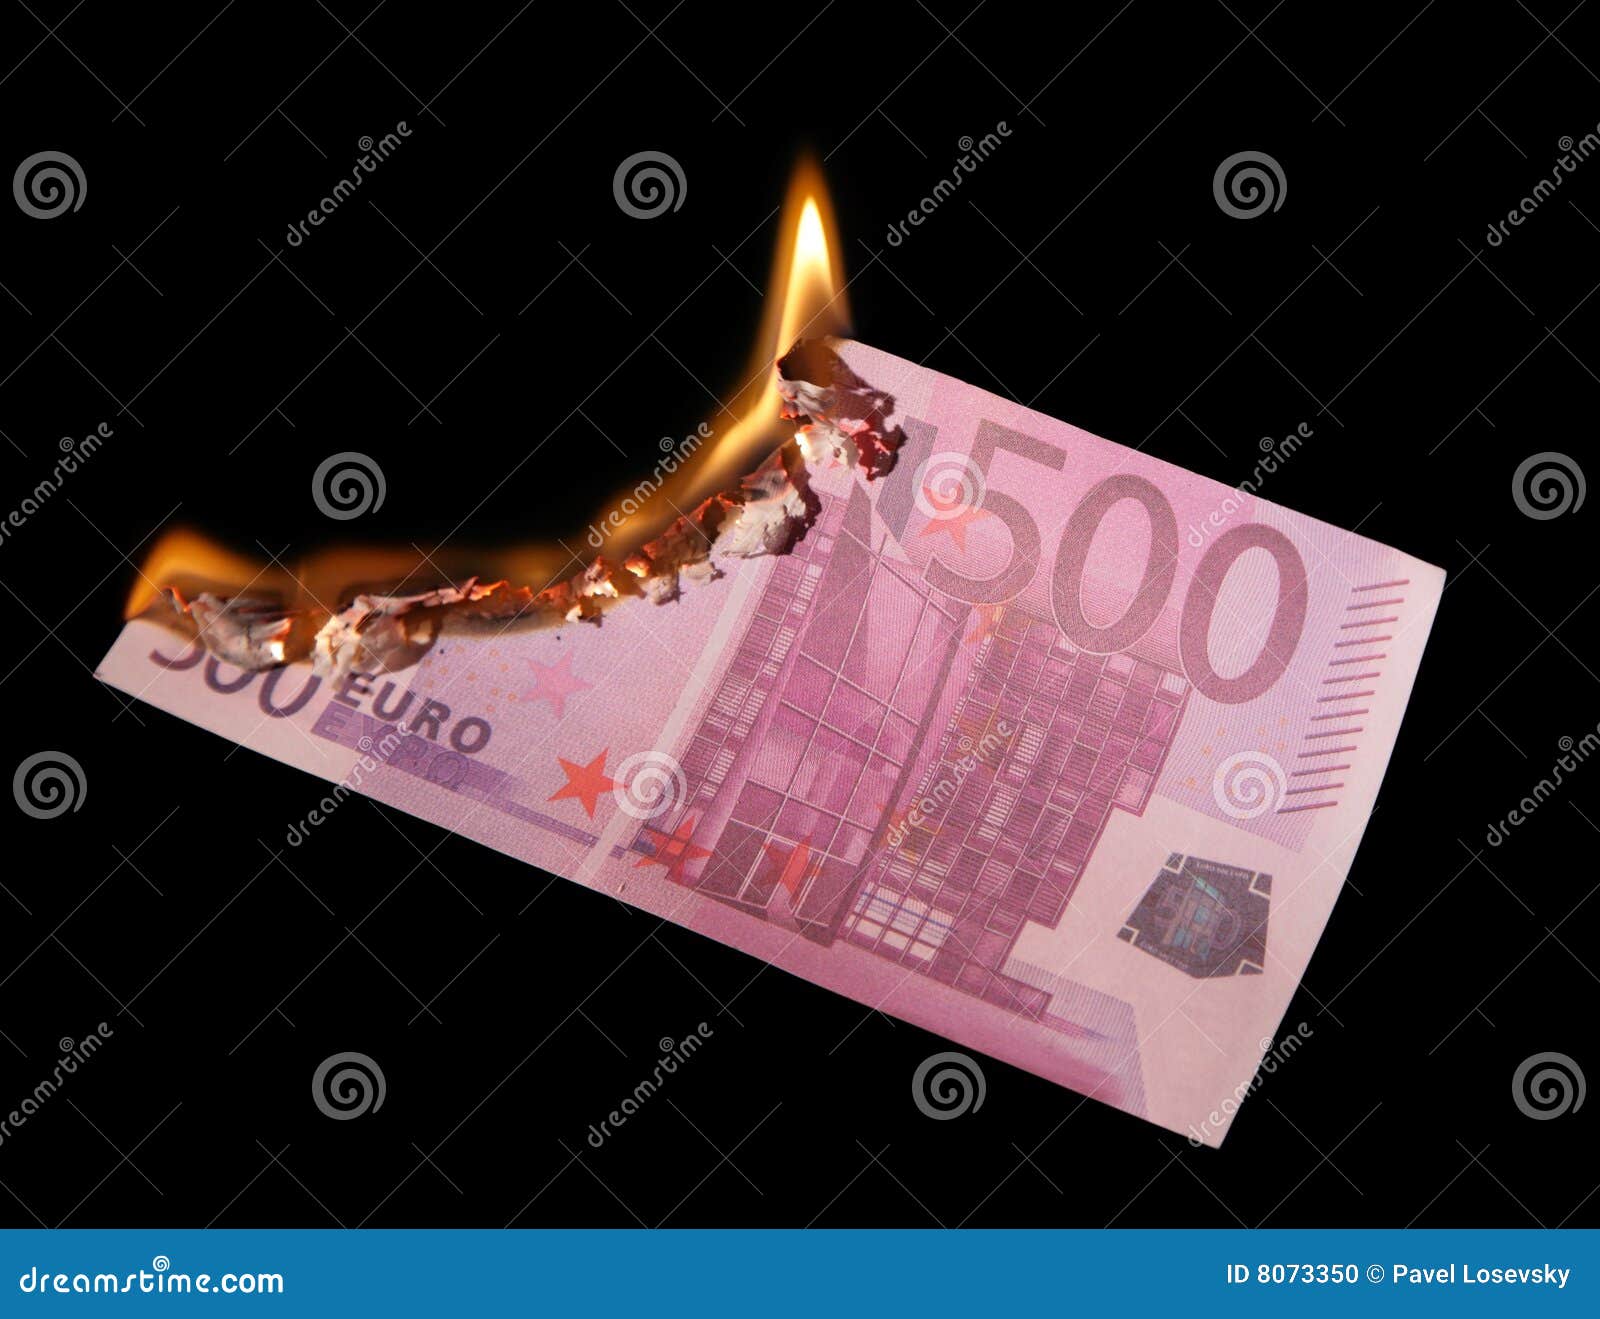 burning five hundred euros